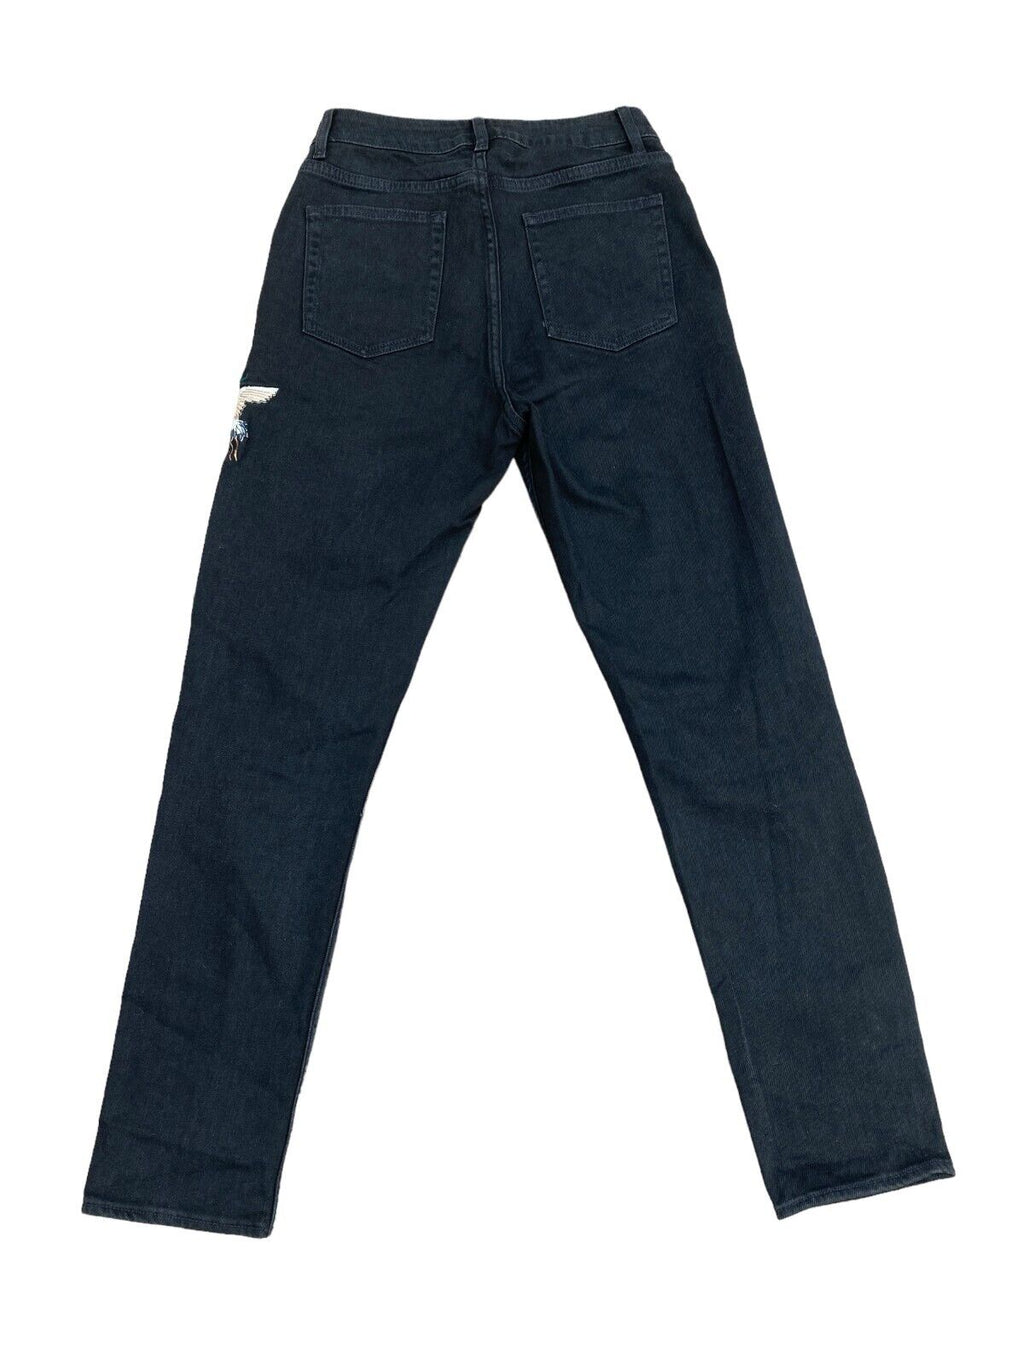 Embroidered denim jeans High Waist Cut